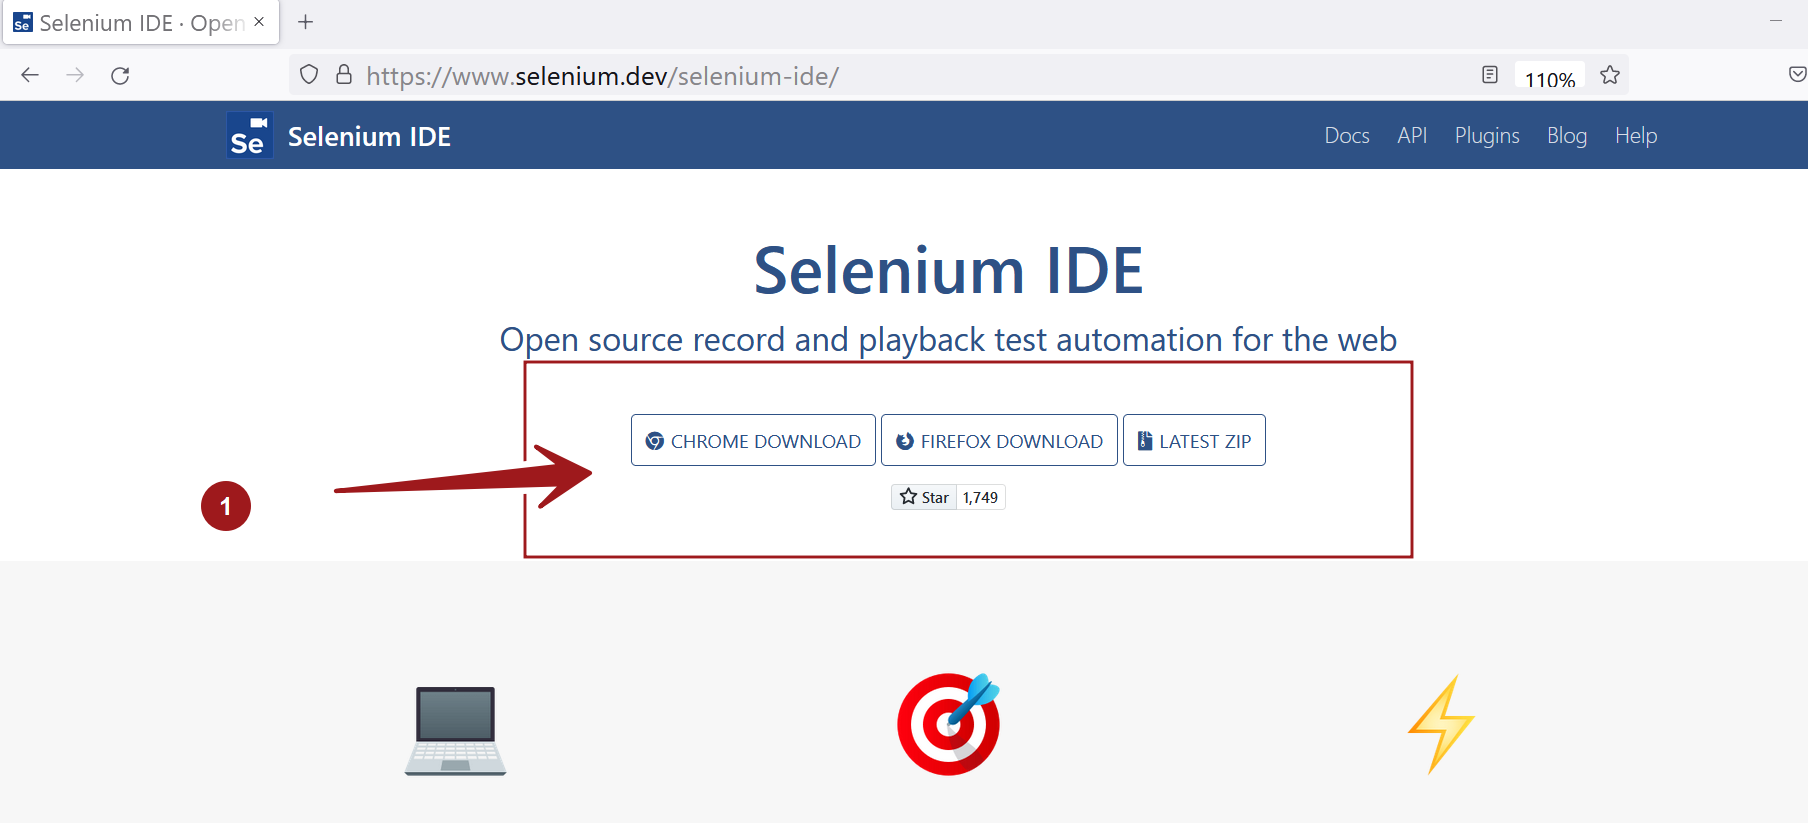 Selenium IDE Downloads links